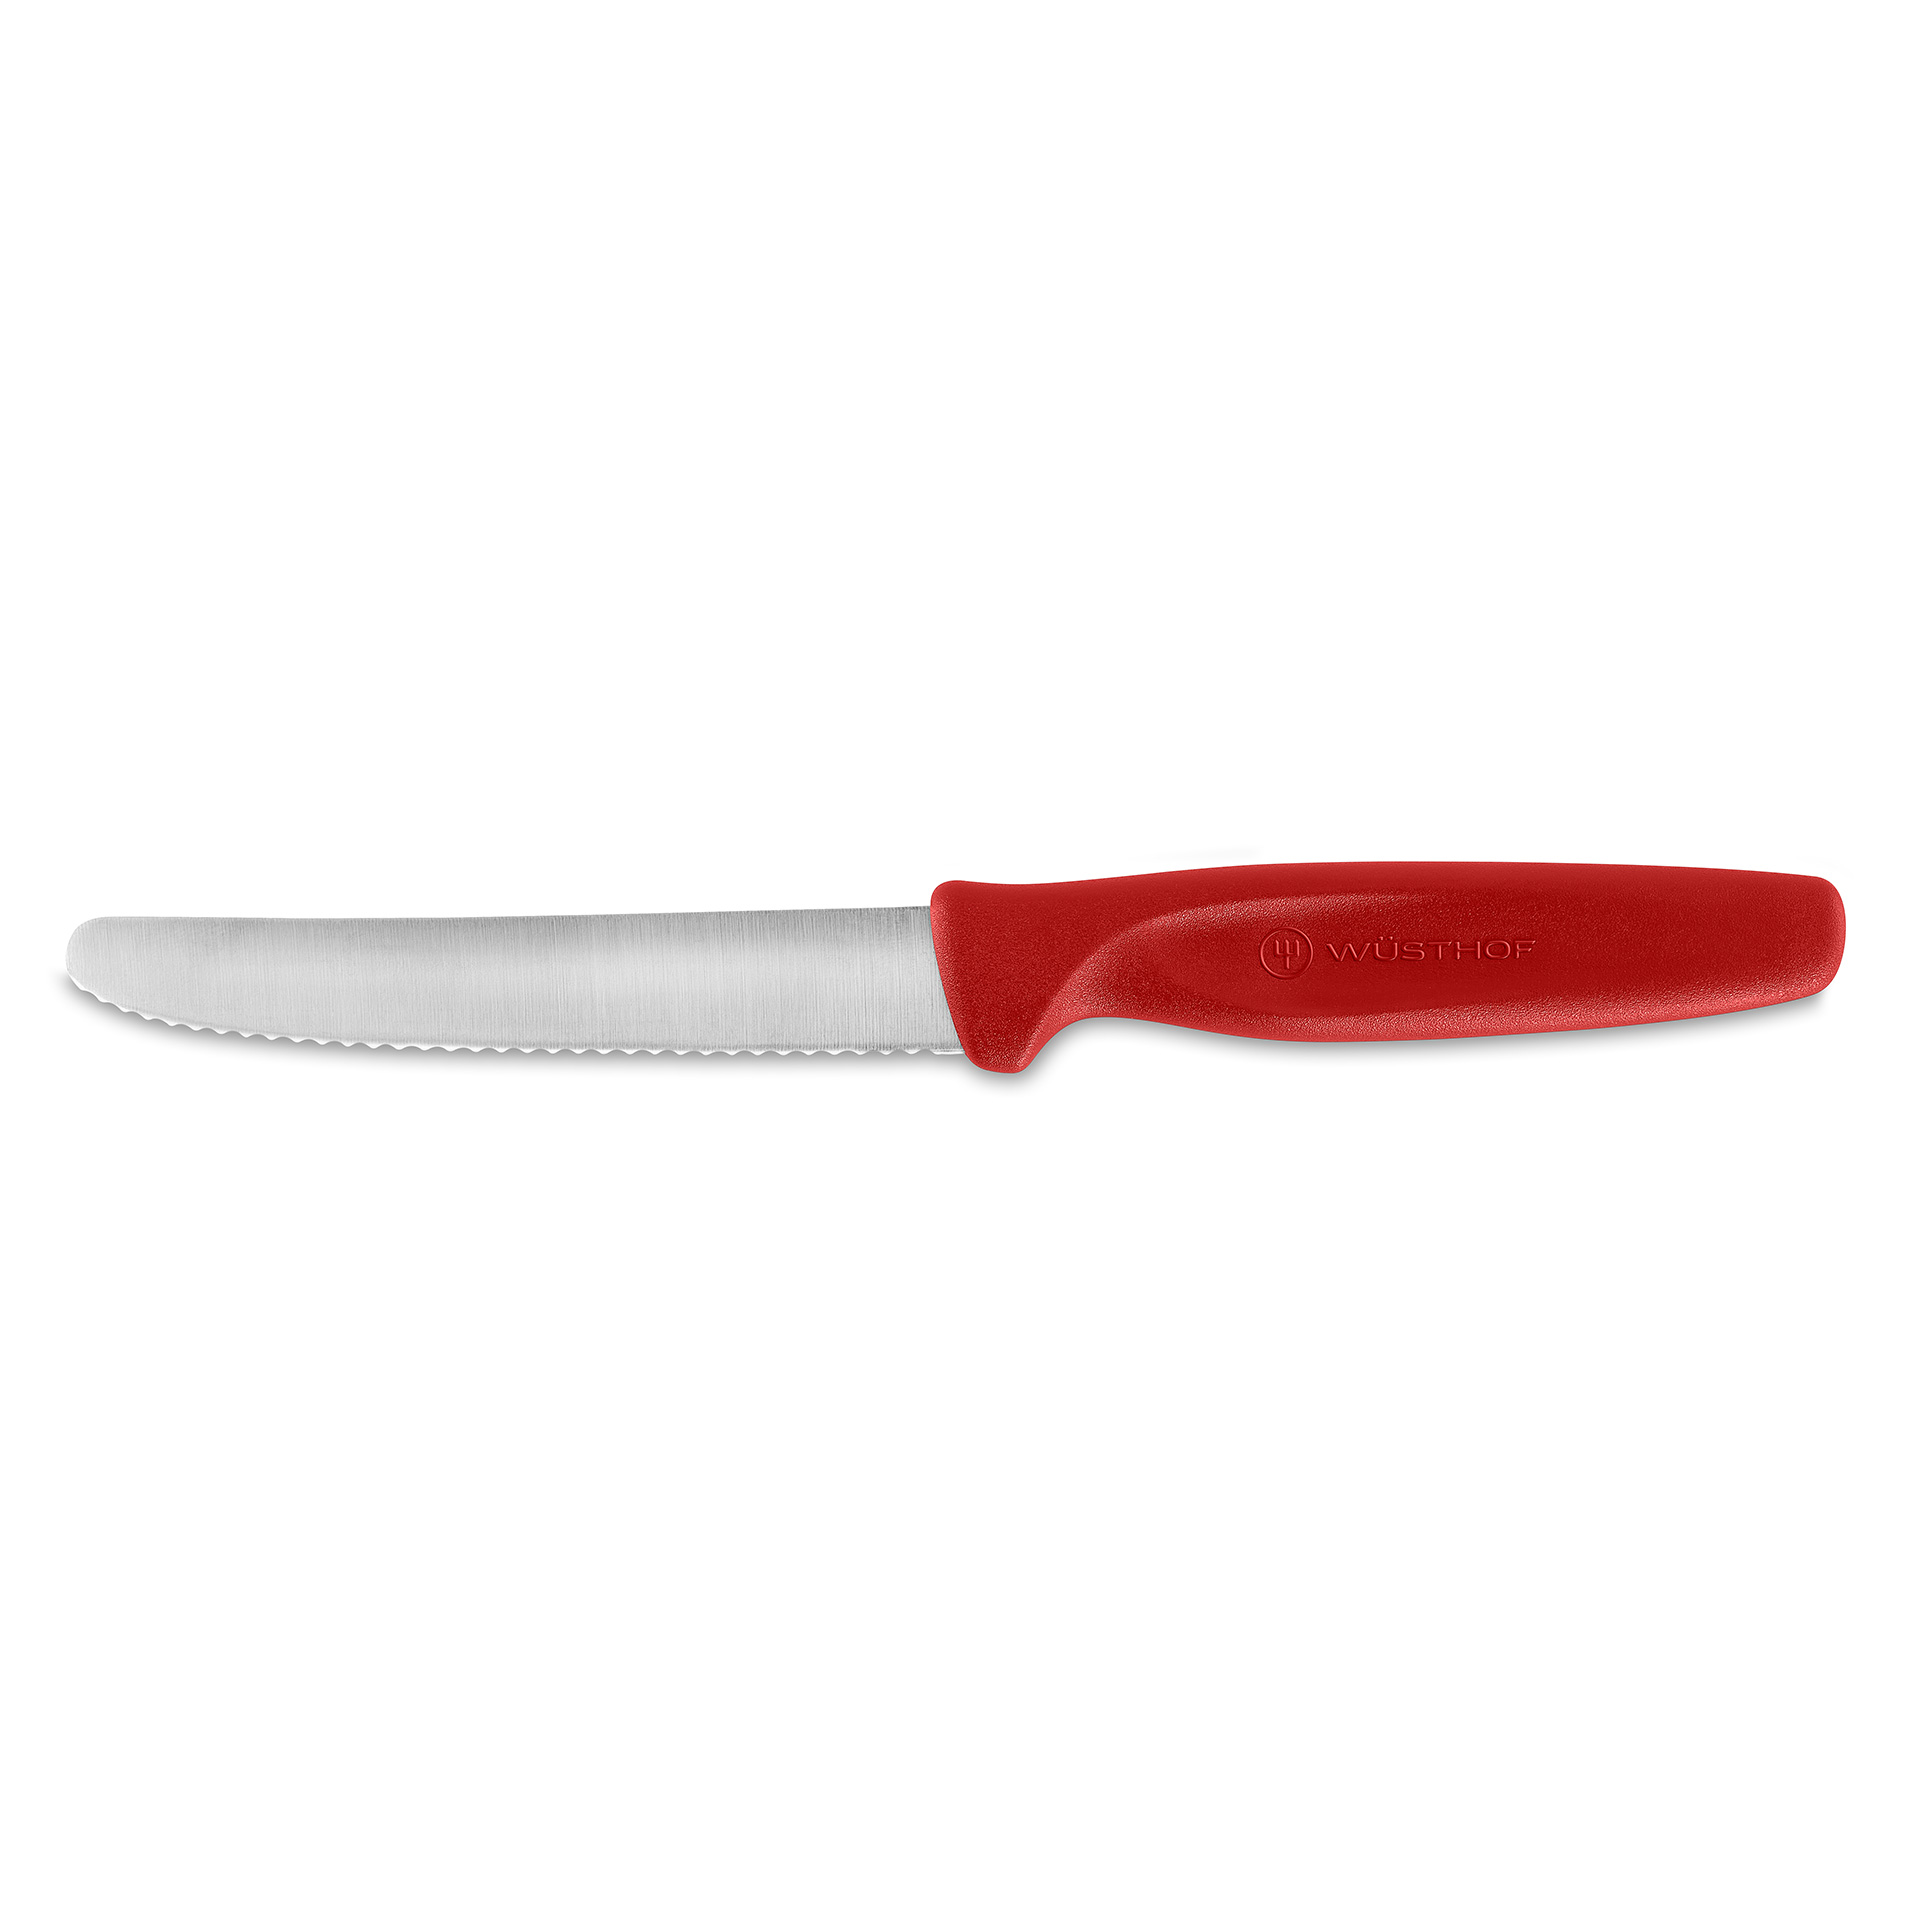 Nóż pikutek czerwony dł. 10 cm CREATE COLLECTION - WÜSTHOF